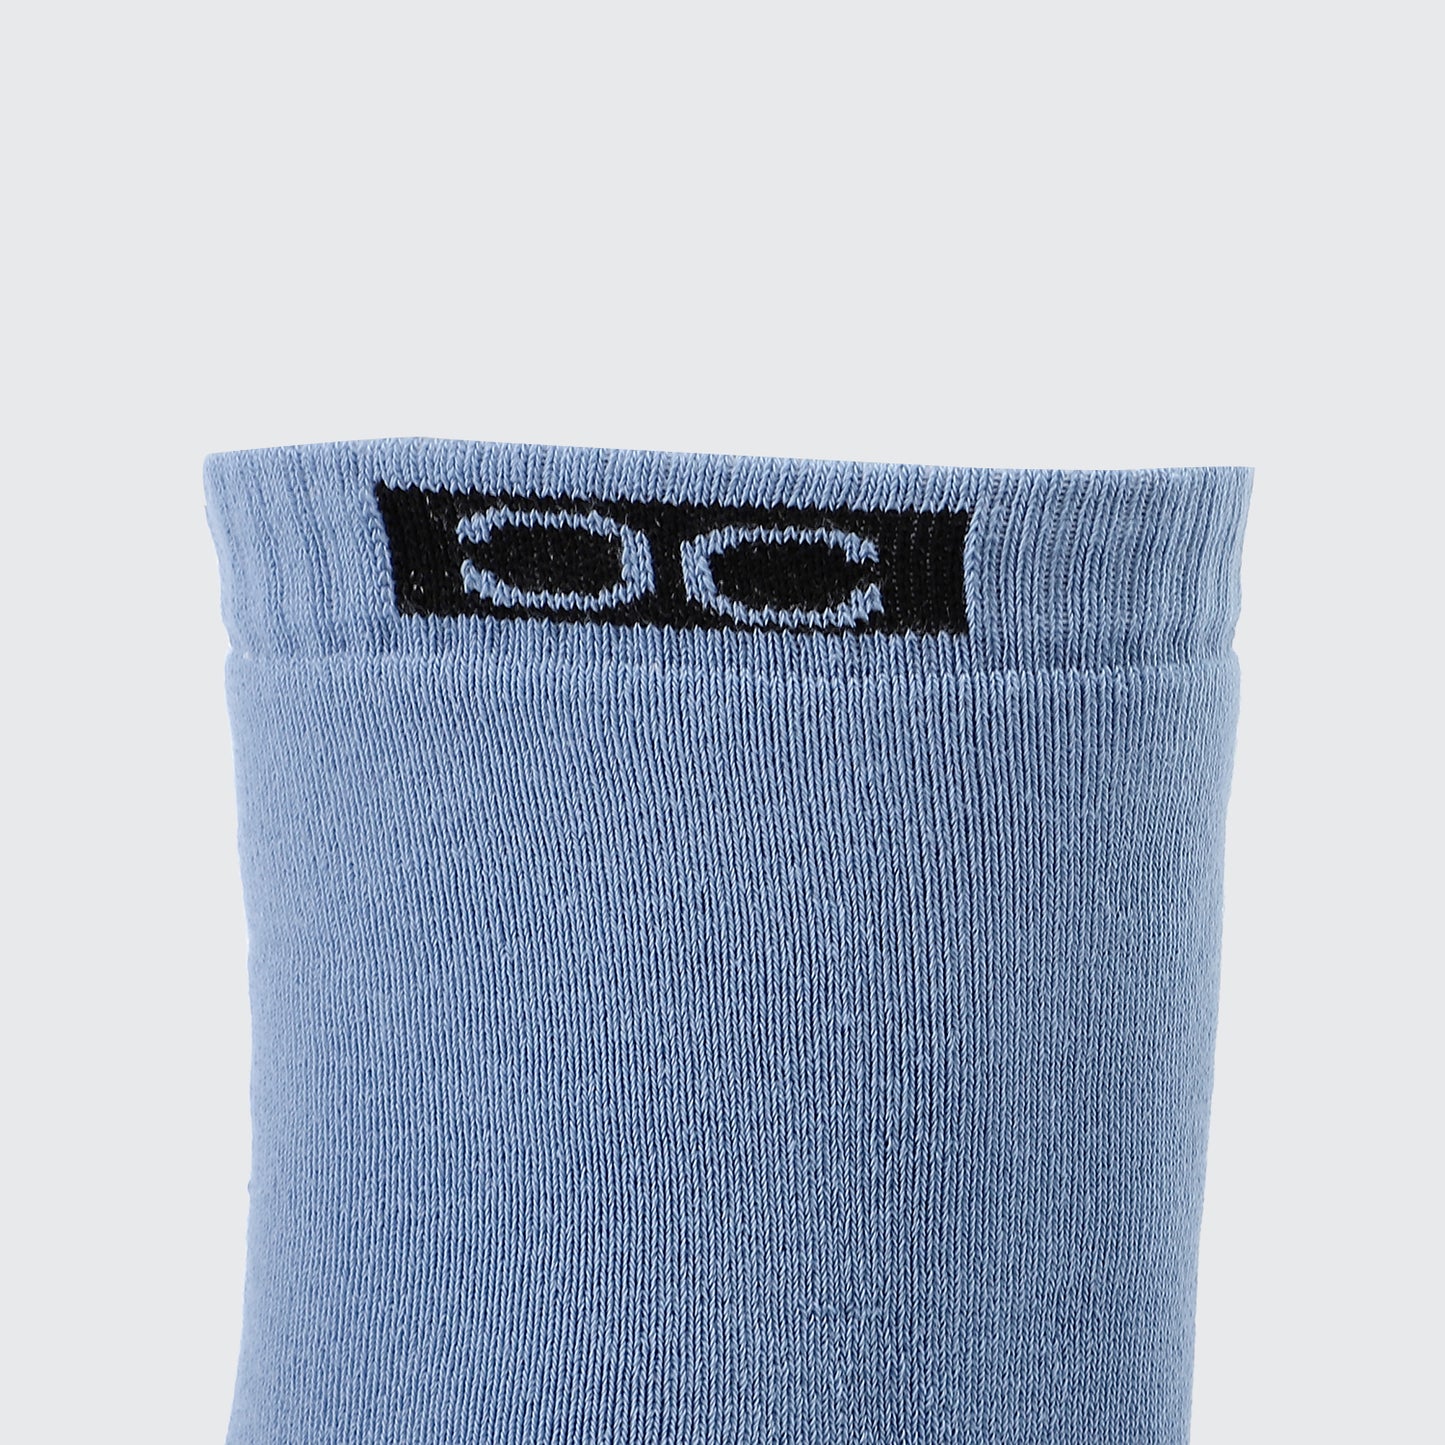 Men Thermal Mid Calf Cotton Socks